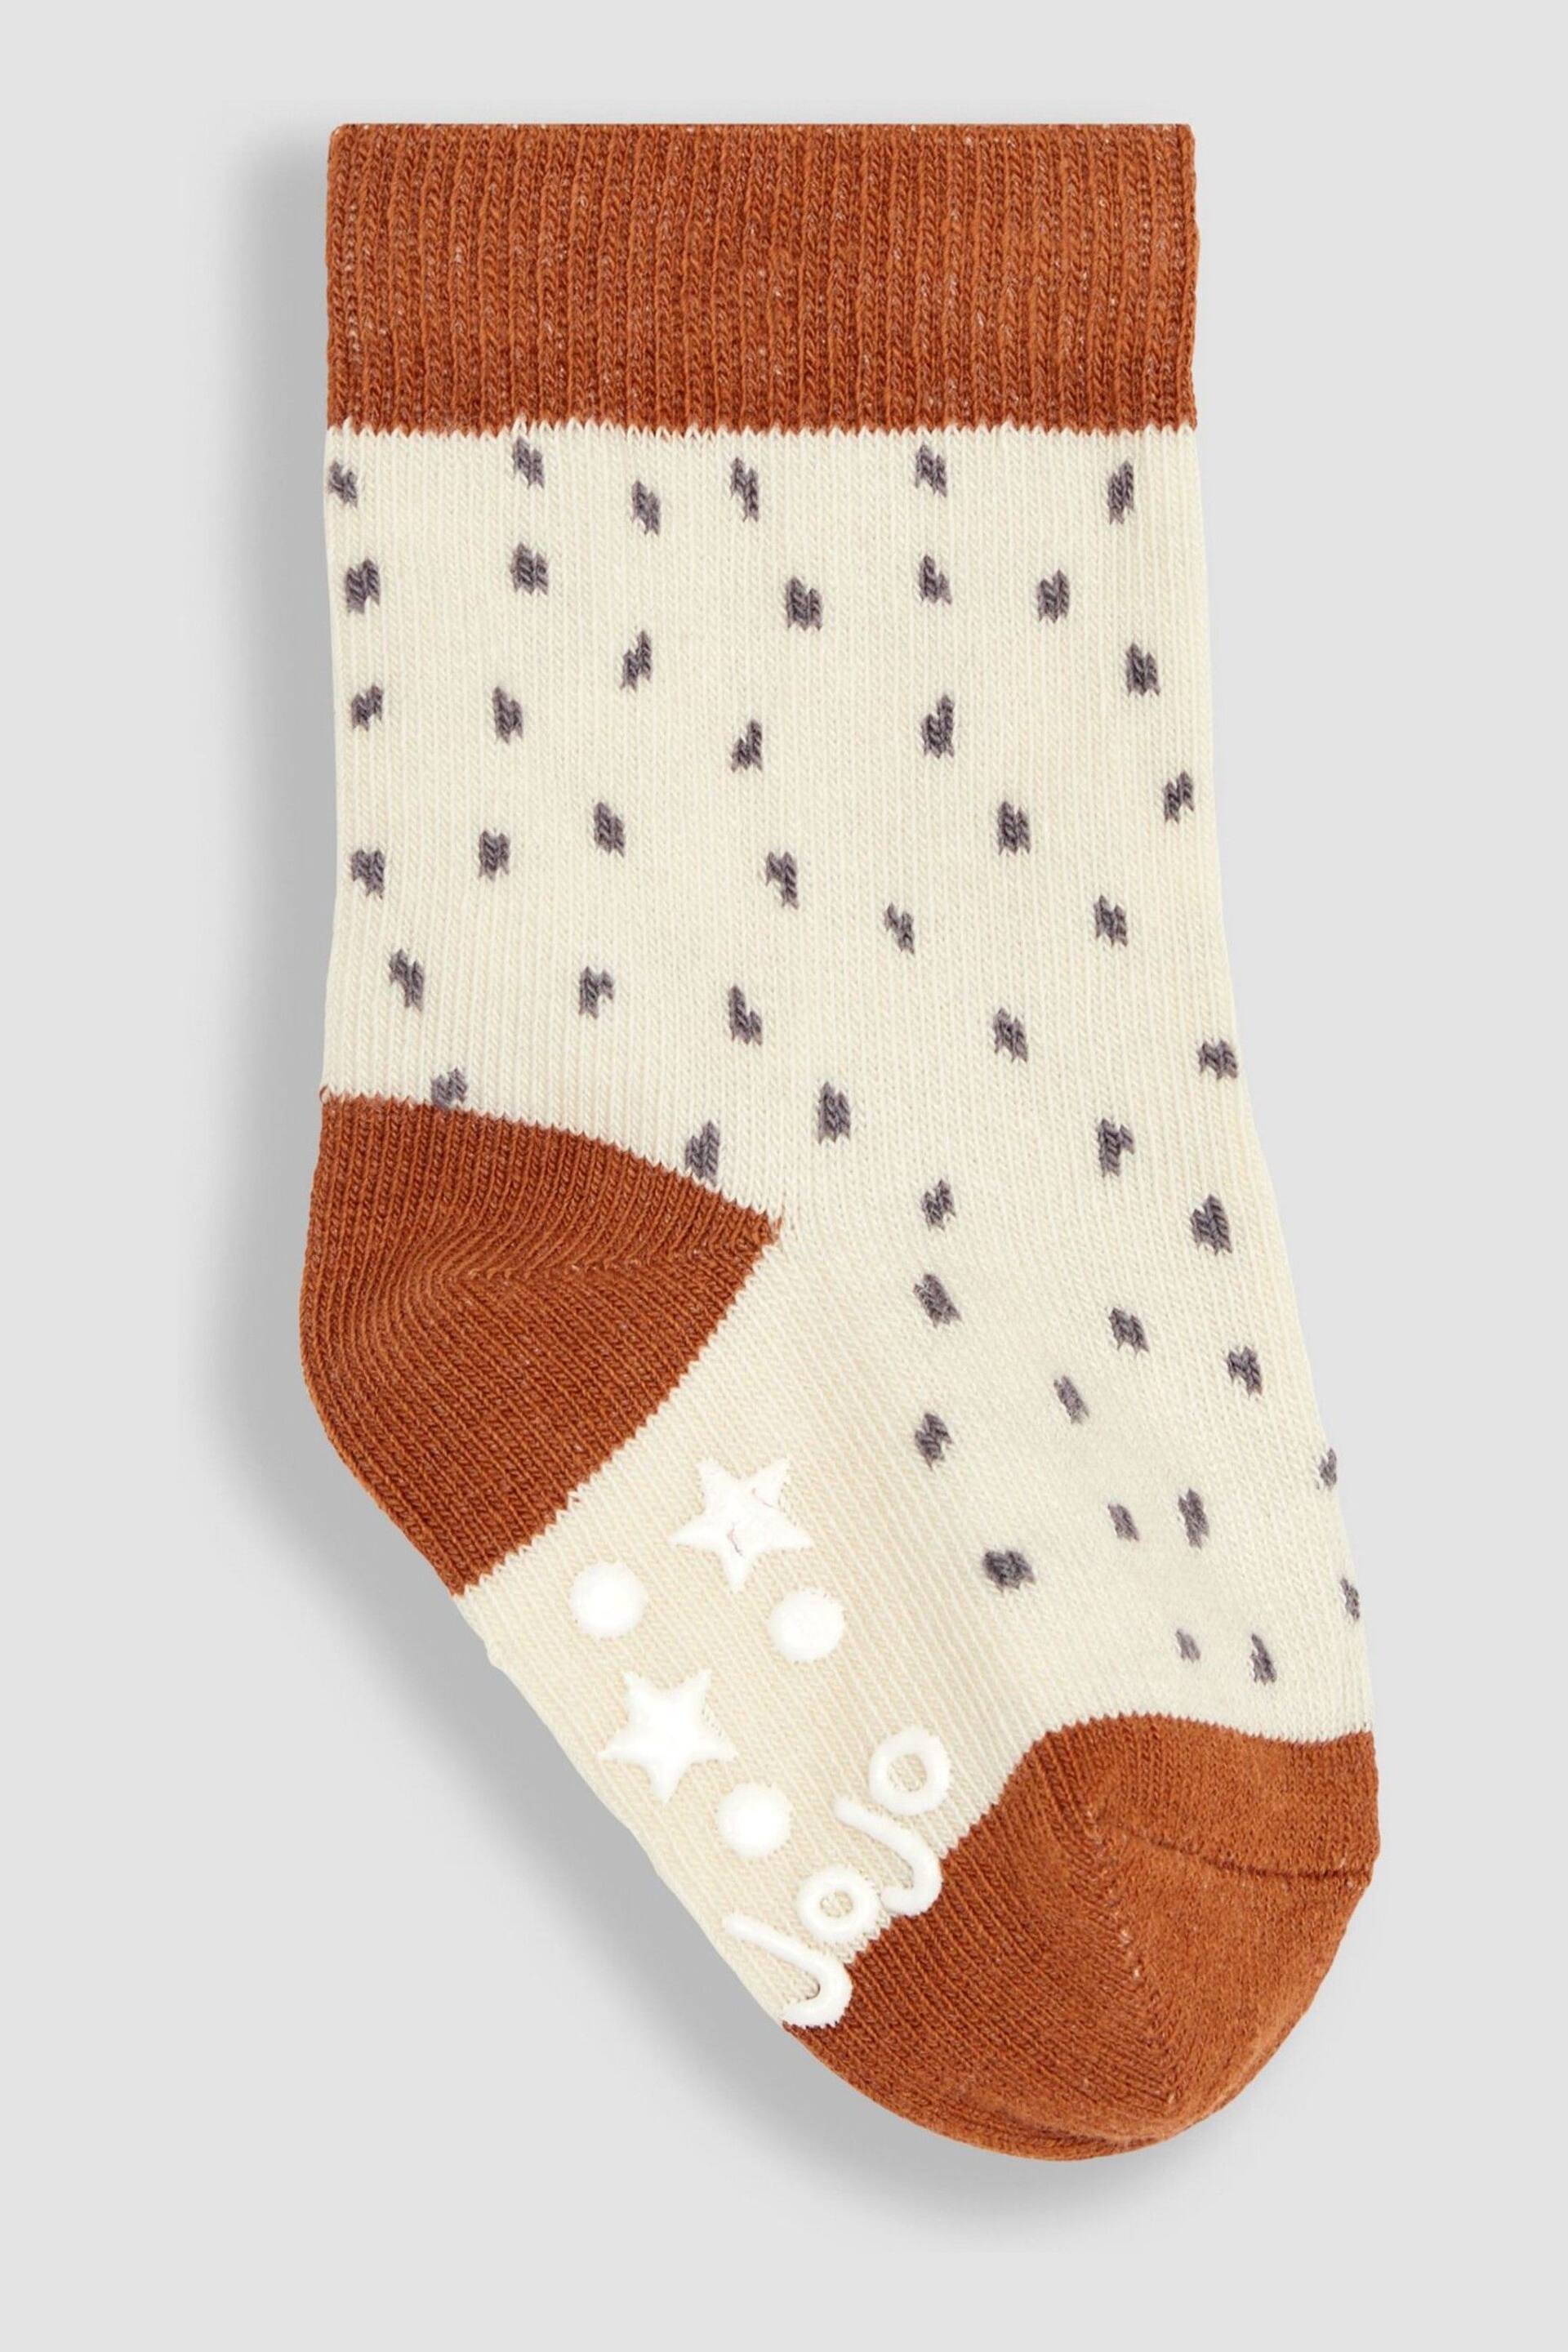 JoJo Maman Bébé Grey 3-Pack Safari Socks - Image 4 of 4